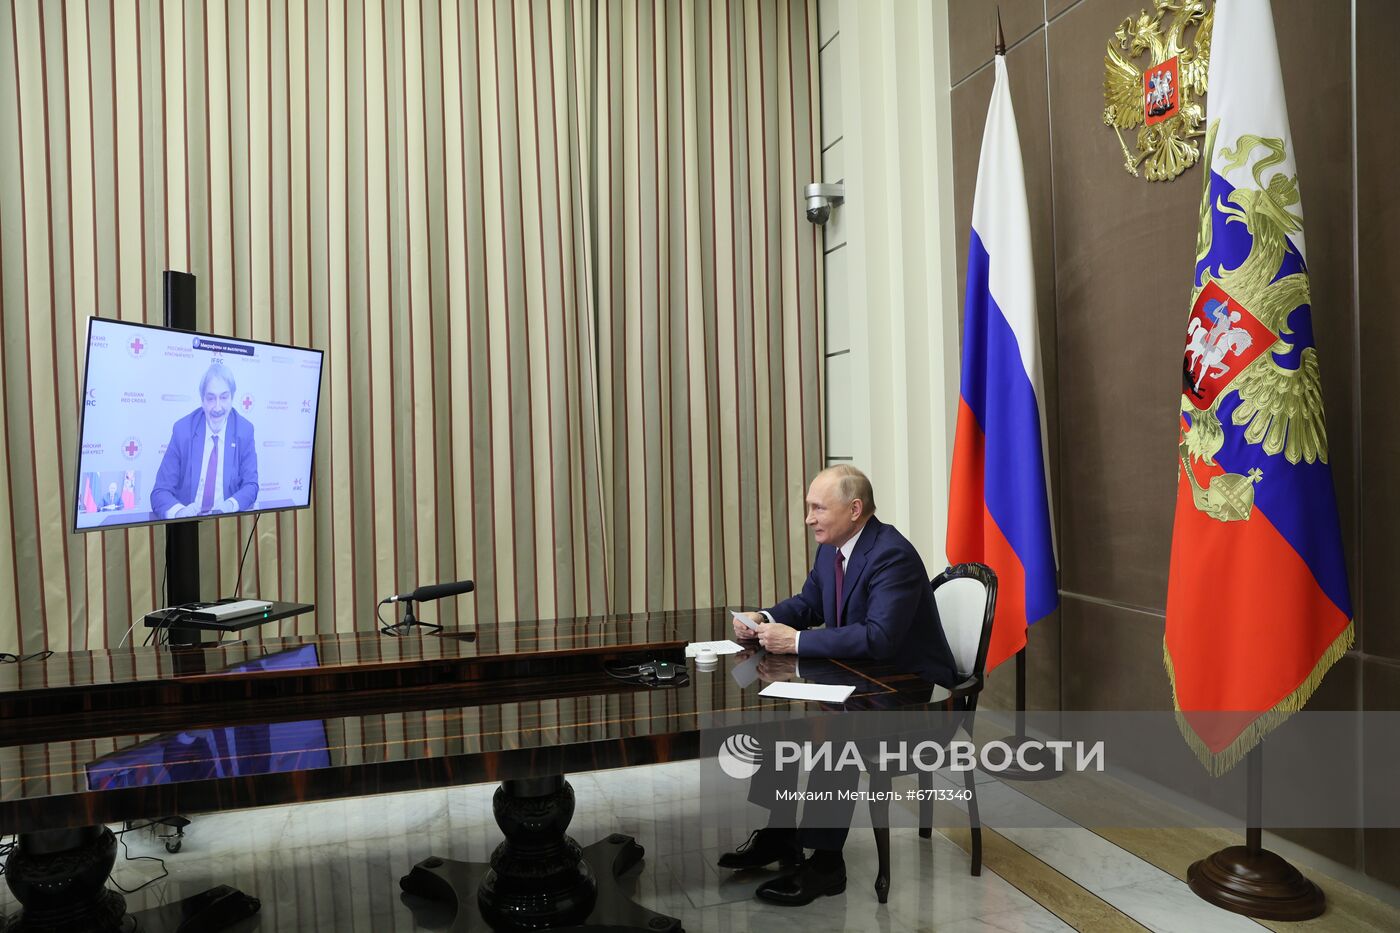 Президент РФ В. Путин провел встречу с президентом МФКК Ф. Роккой